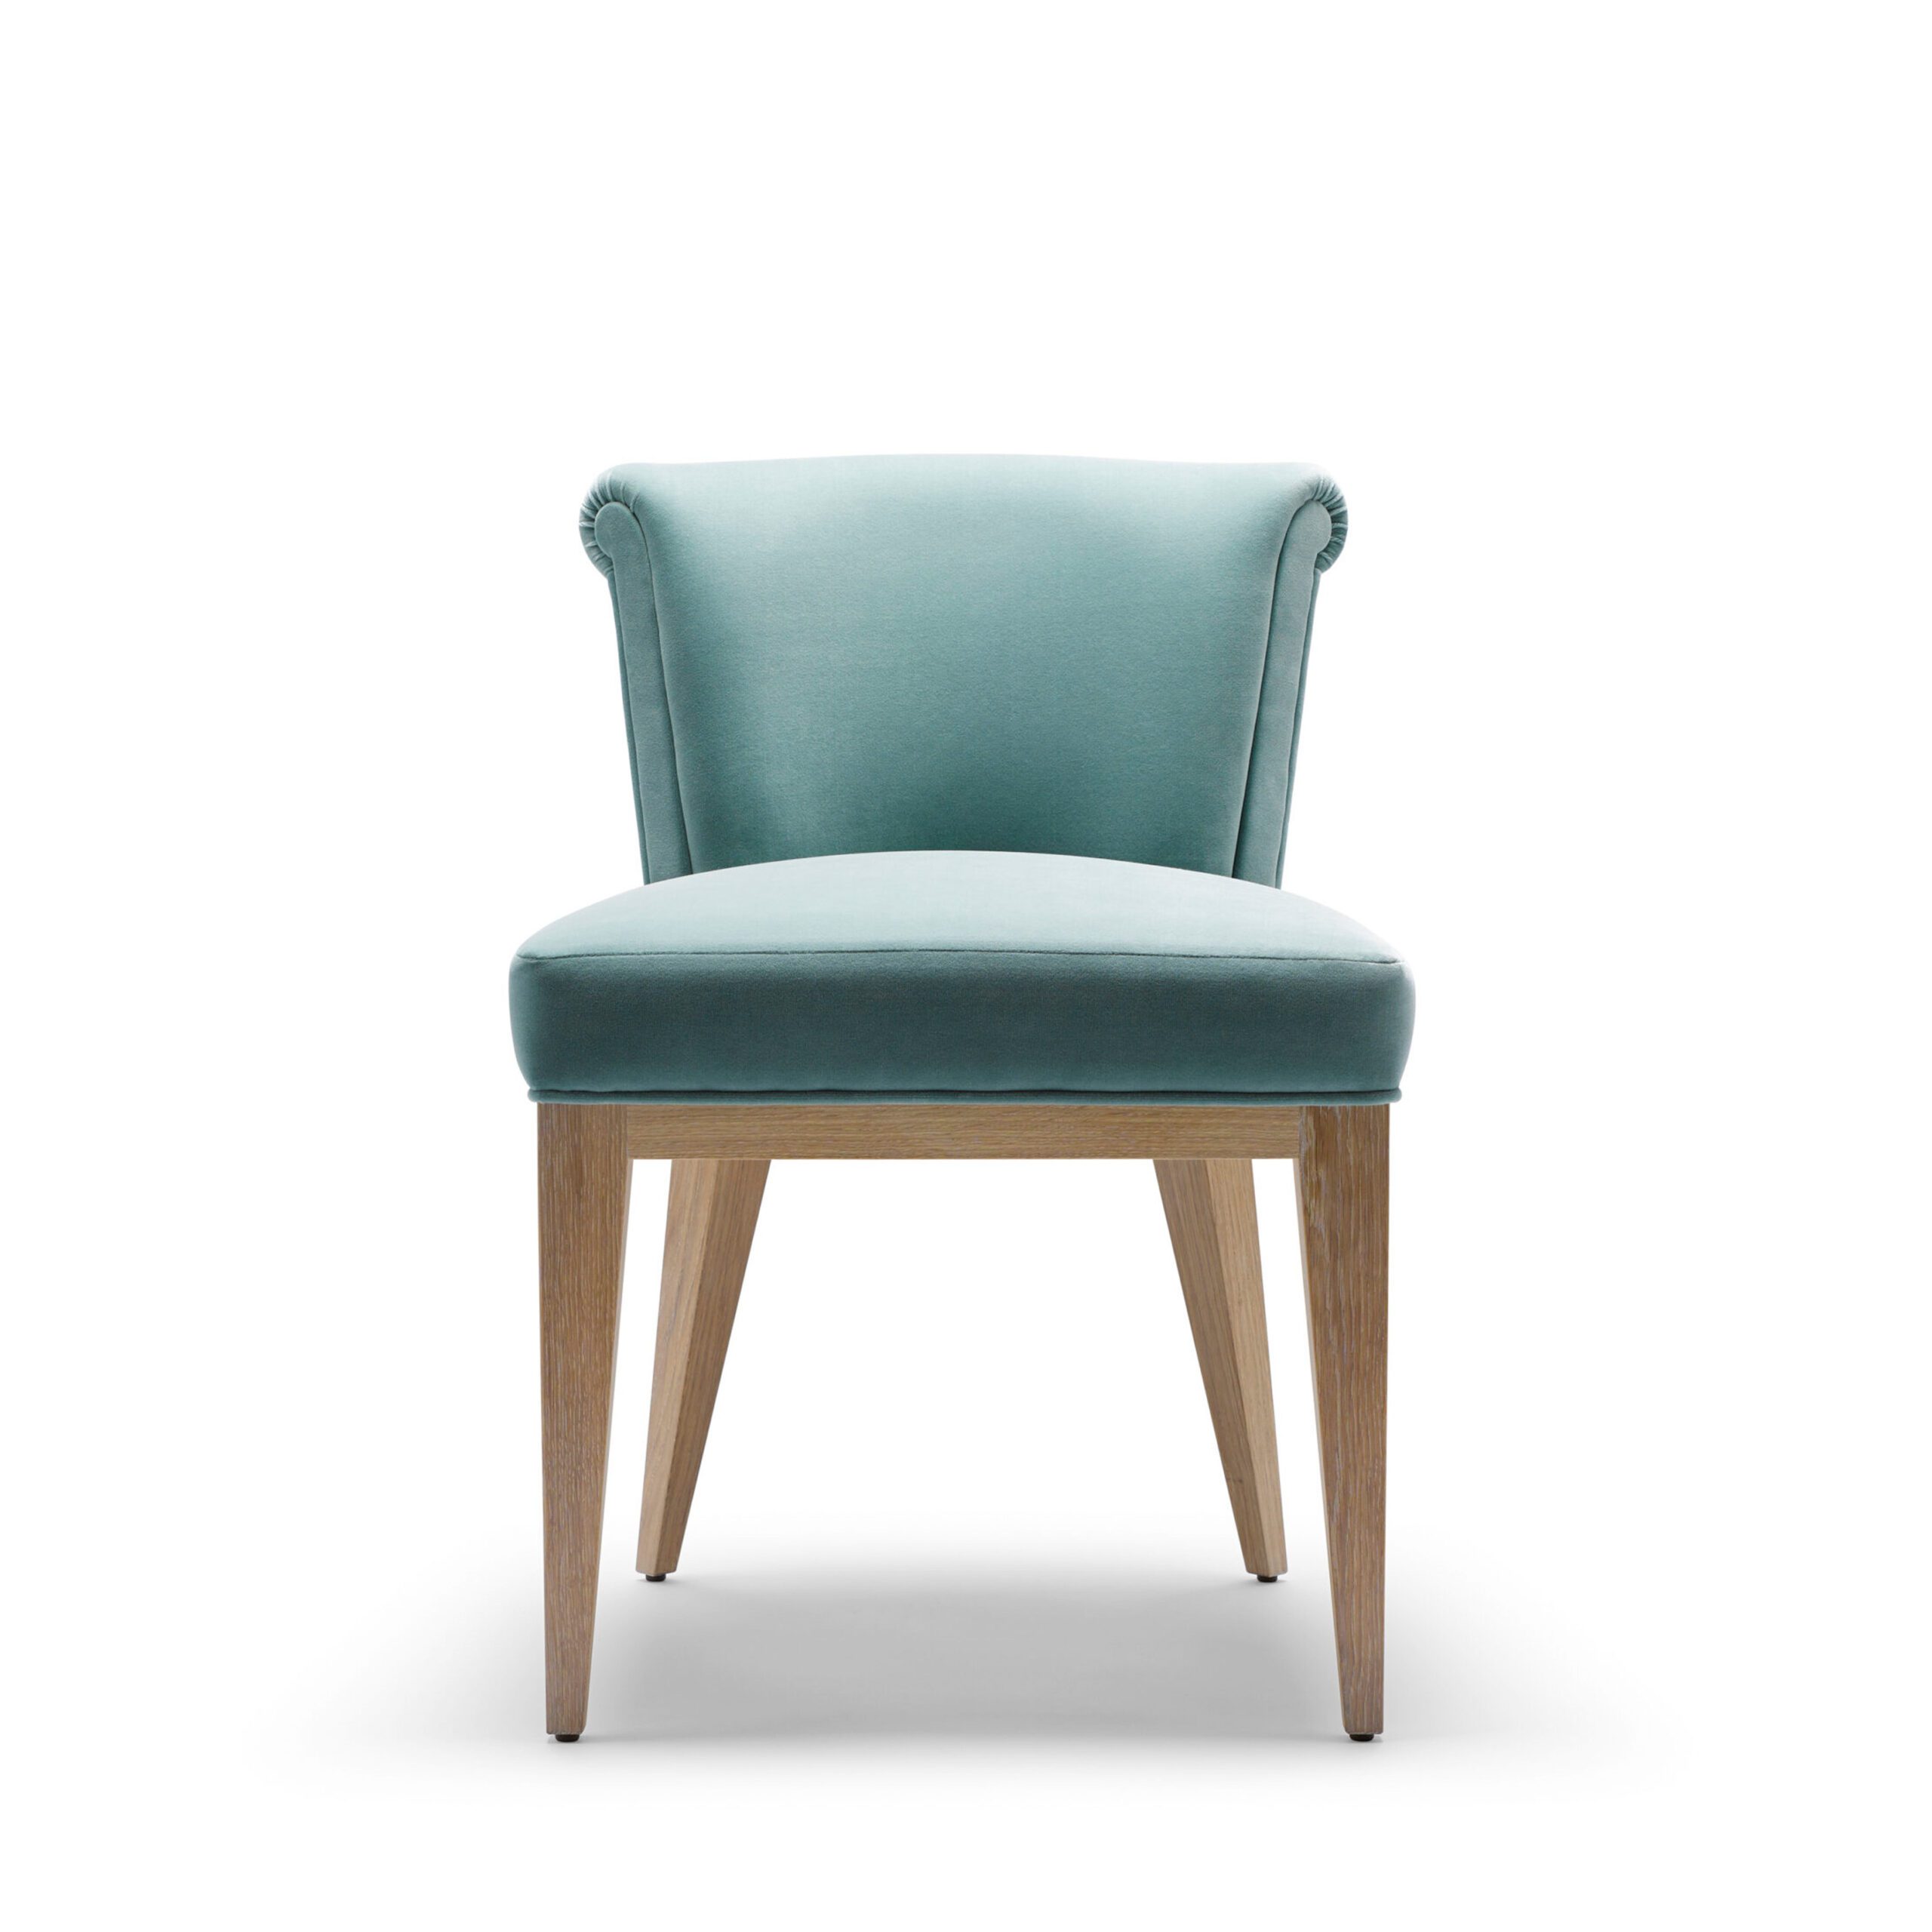 The Eto Dining Chair - Shown here upholstered in soft blue cotton velvet, with legs in white oiled oak.